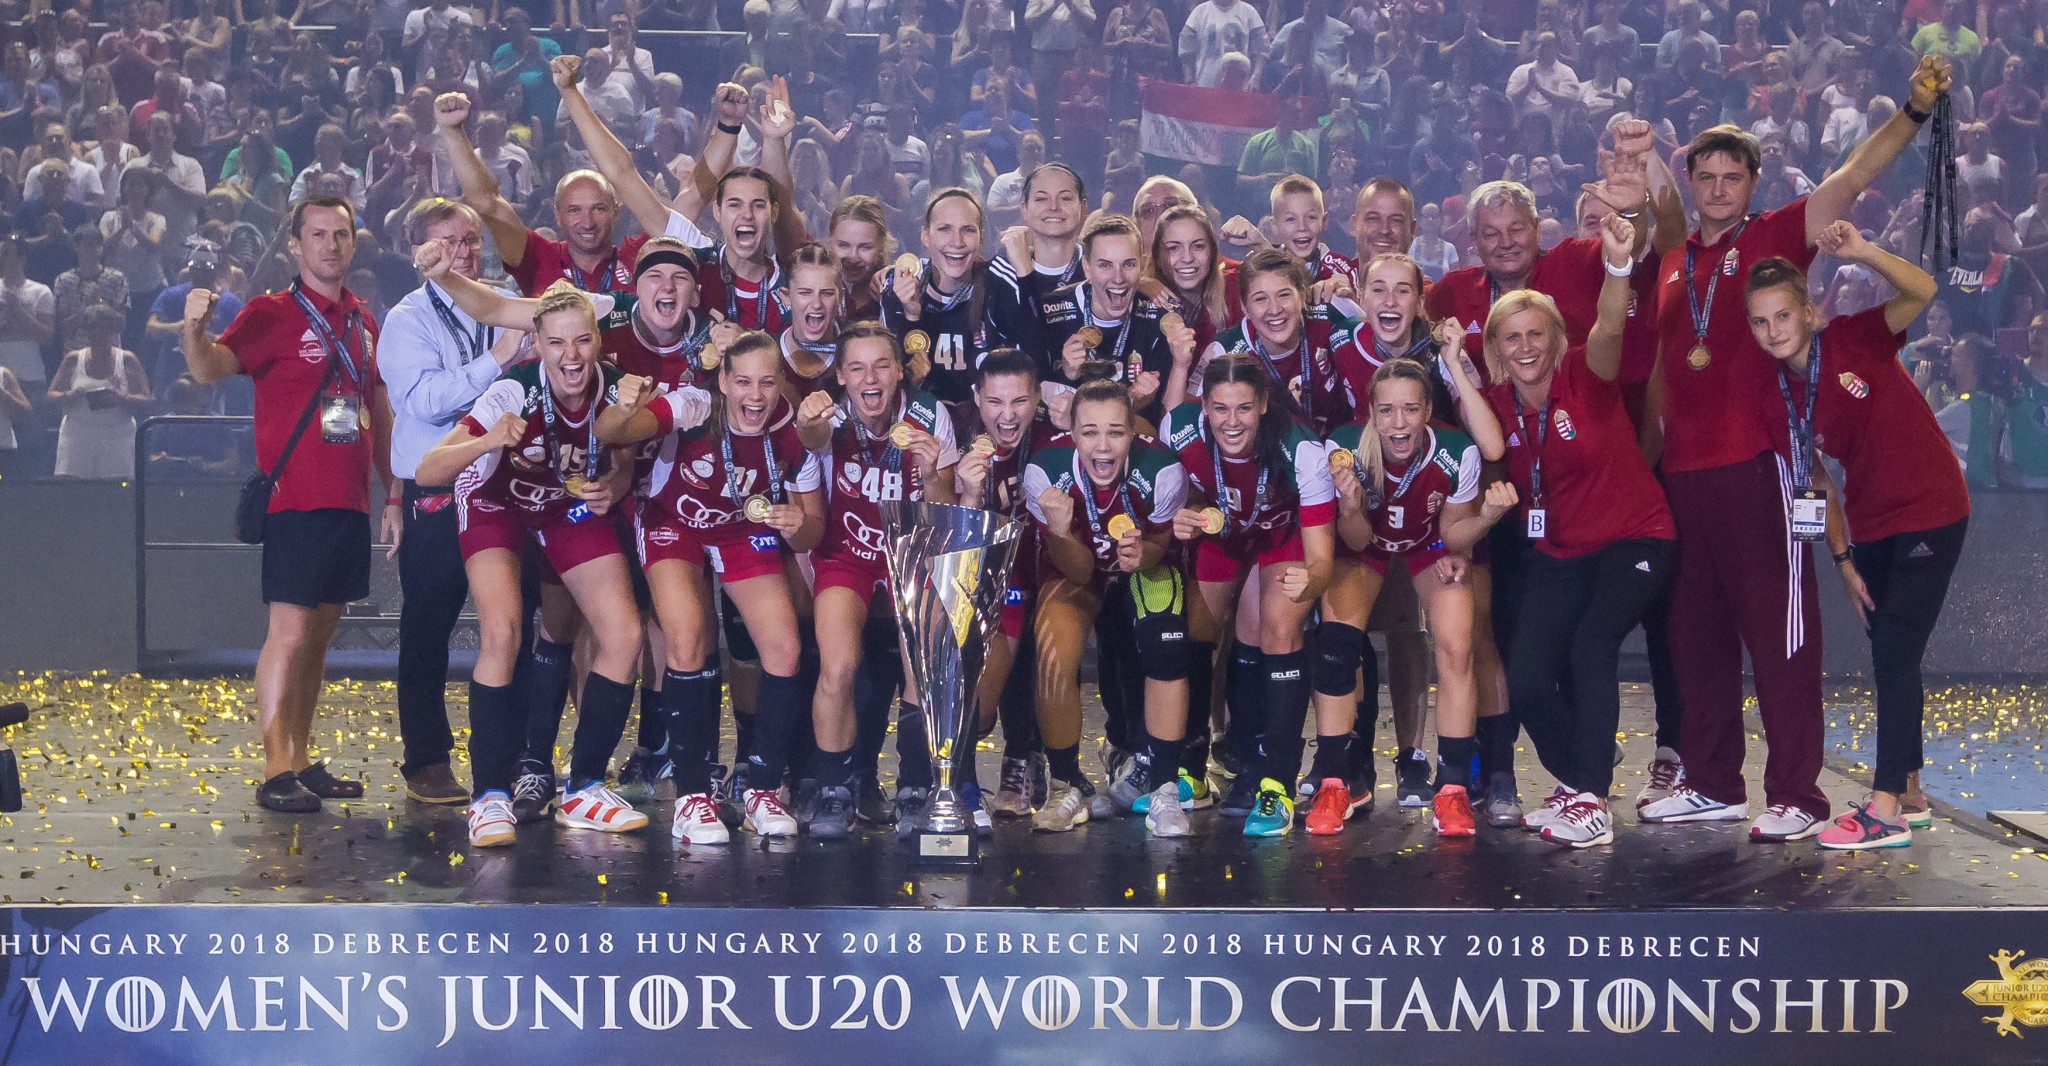 Hungary win Women's Junior World Handball Championship title on home soil